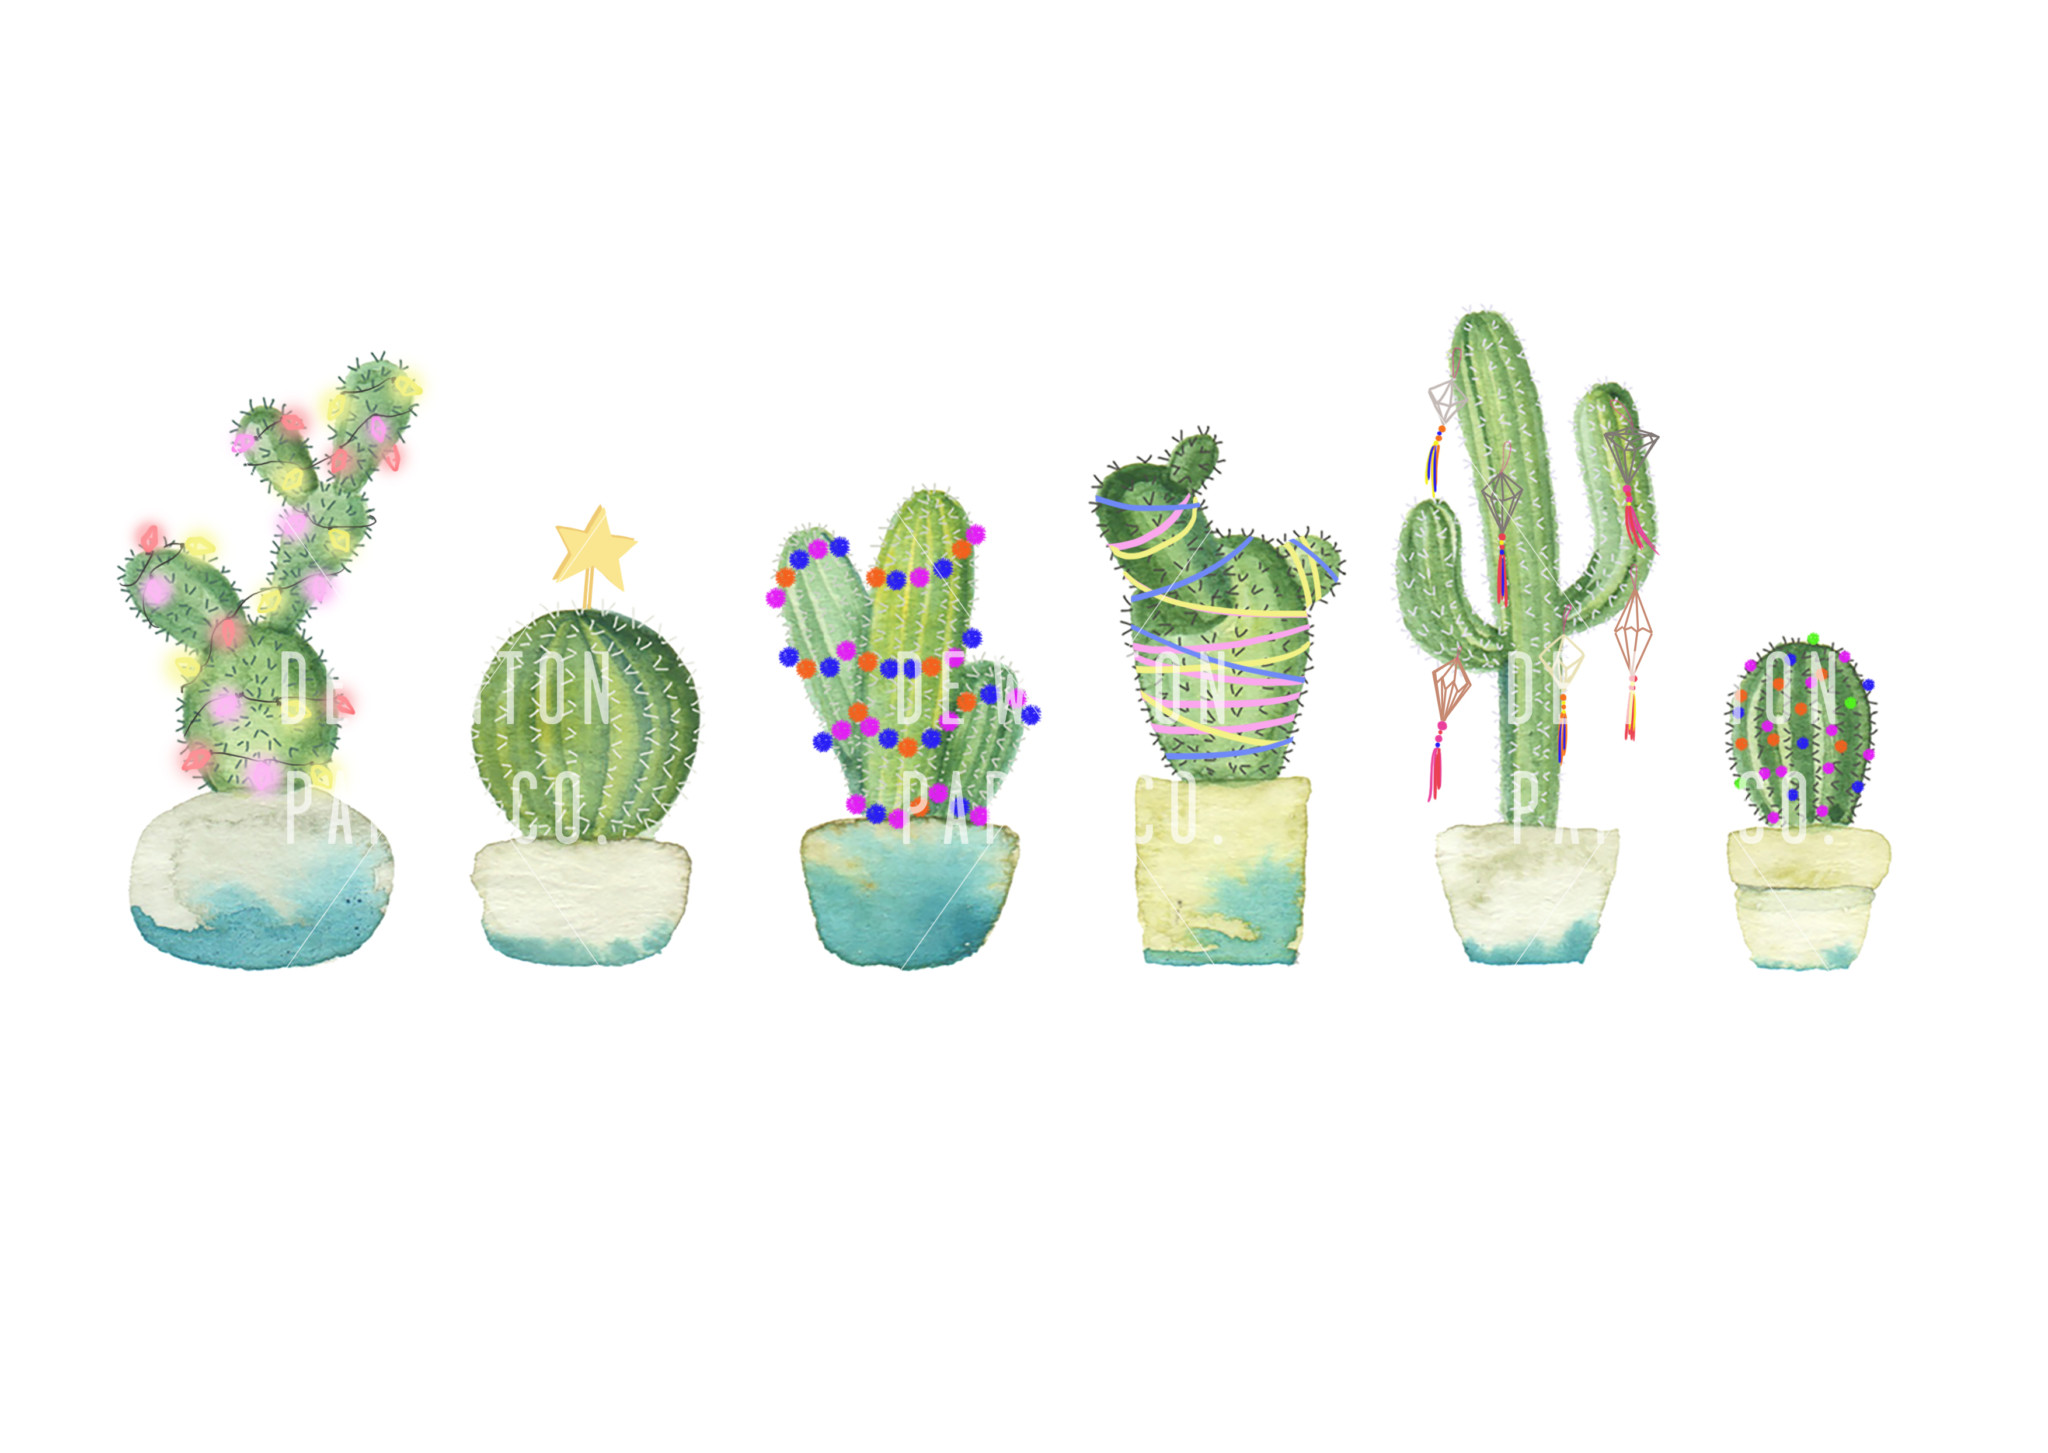 Paint your own Christmas Cactus Watercolour Tutorial PDF, catcus tutorial, watercolour tutorial, pdf, digital download, cacti tutorial